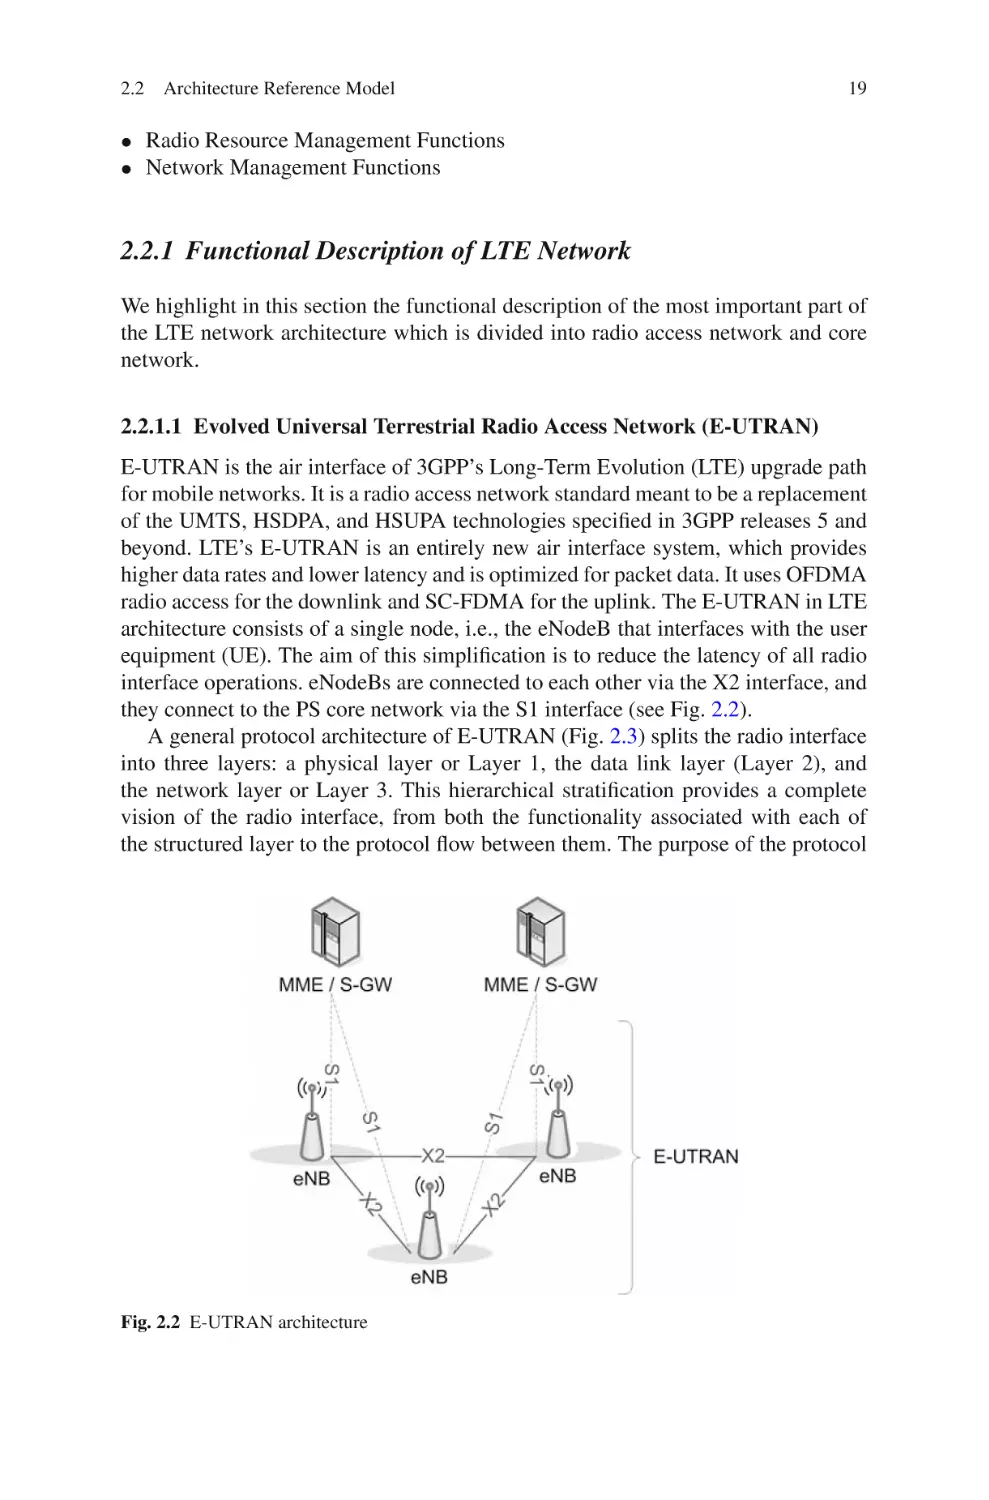 2.2.1  Functional Description of LTE Network